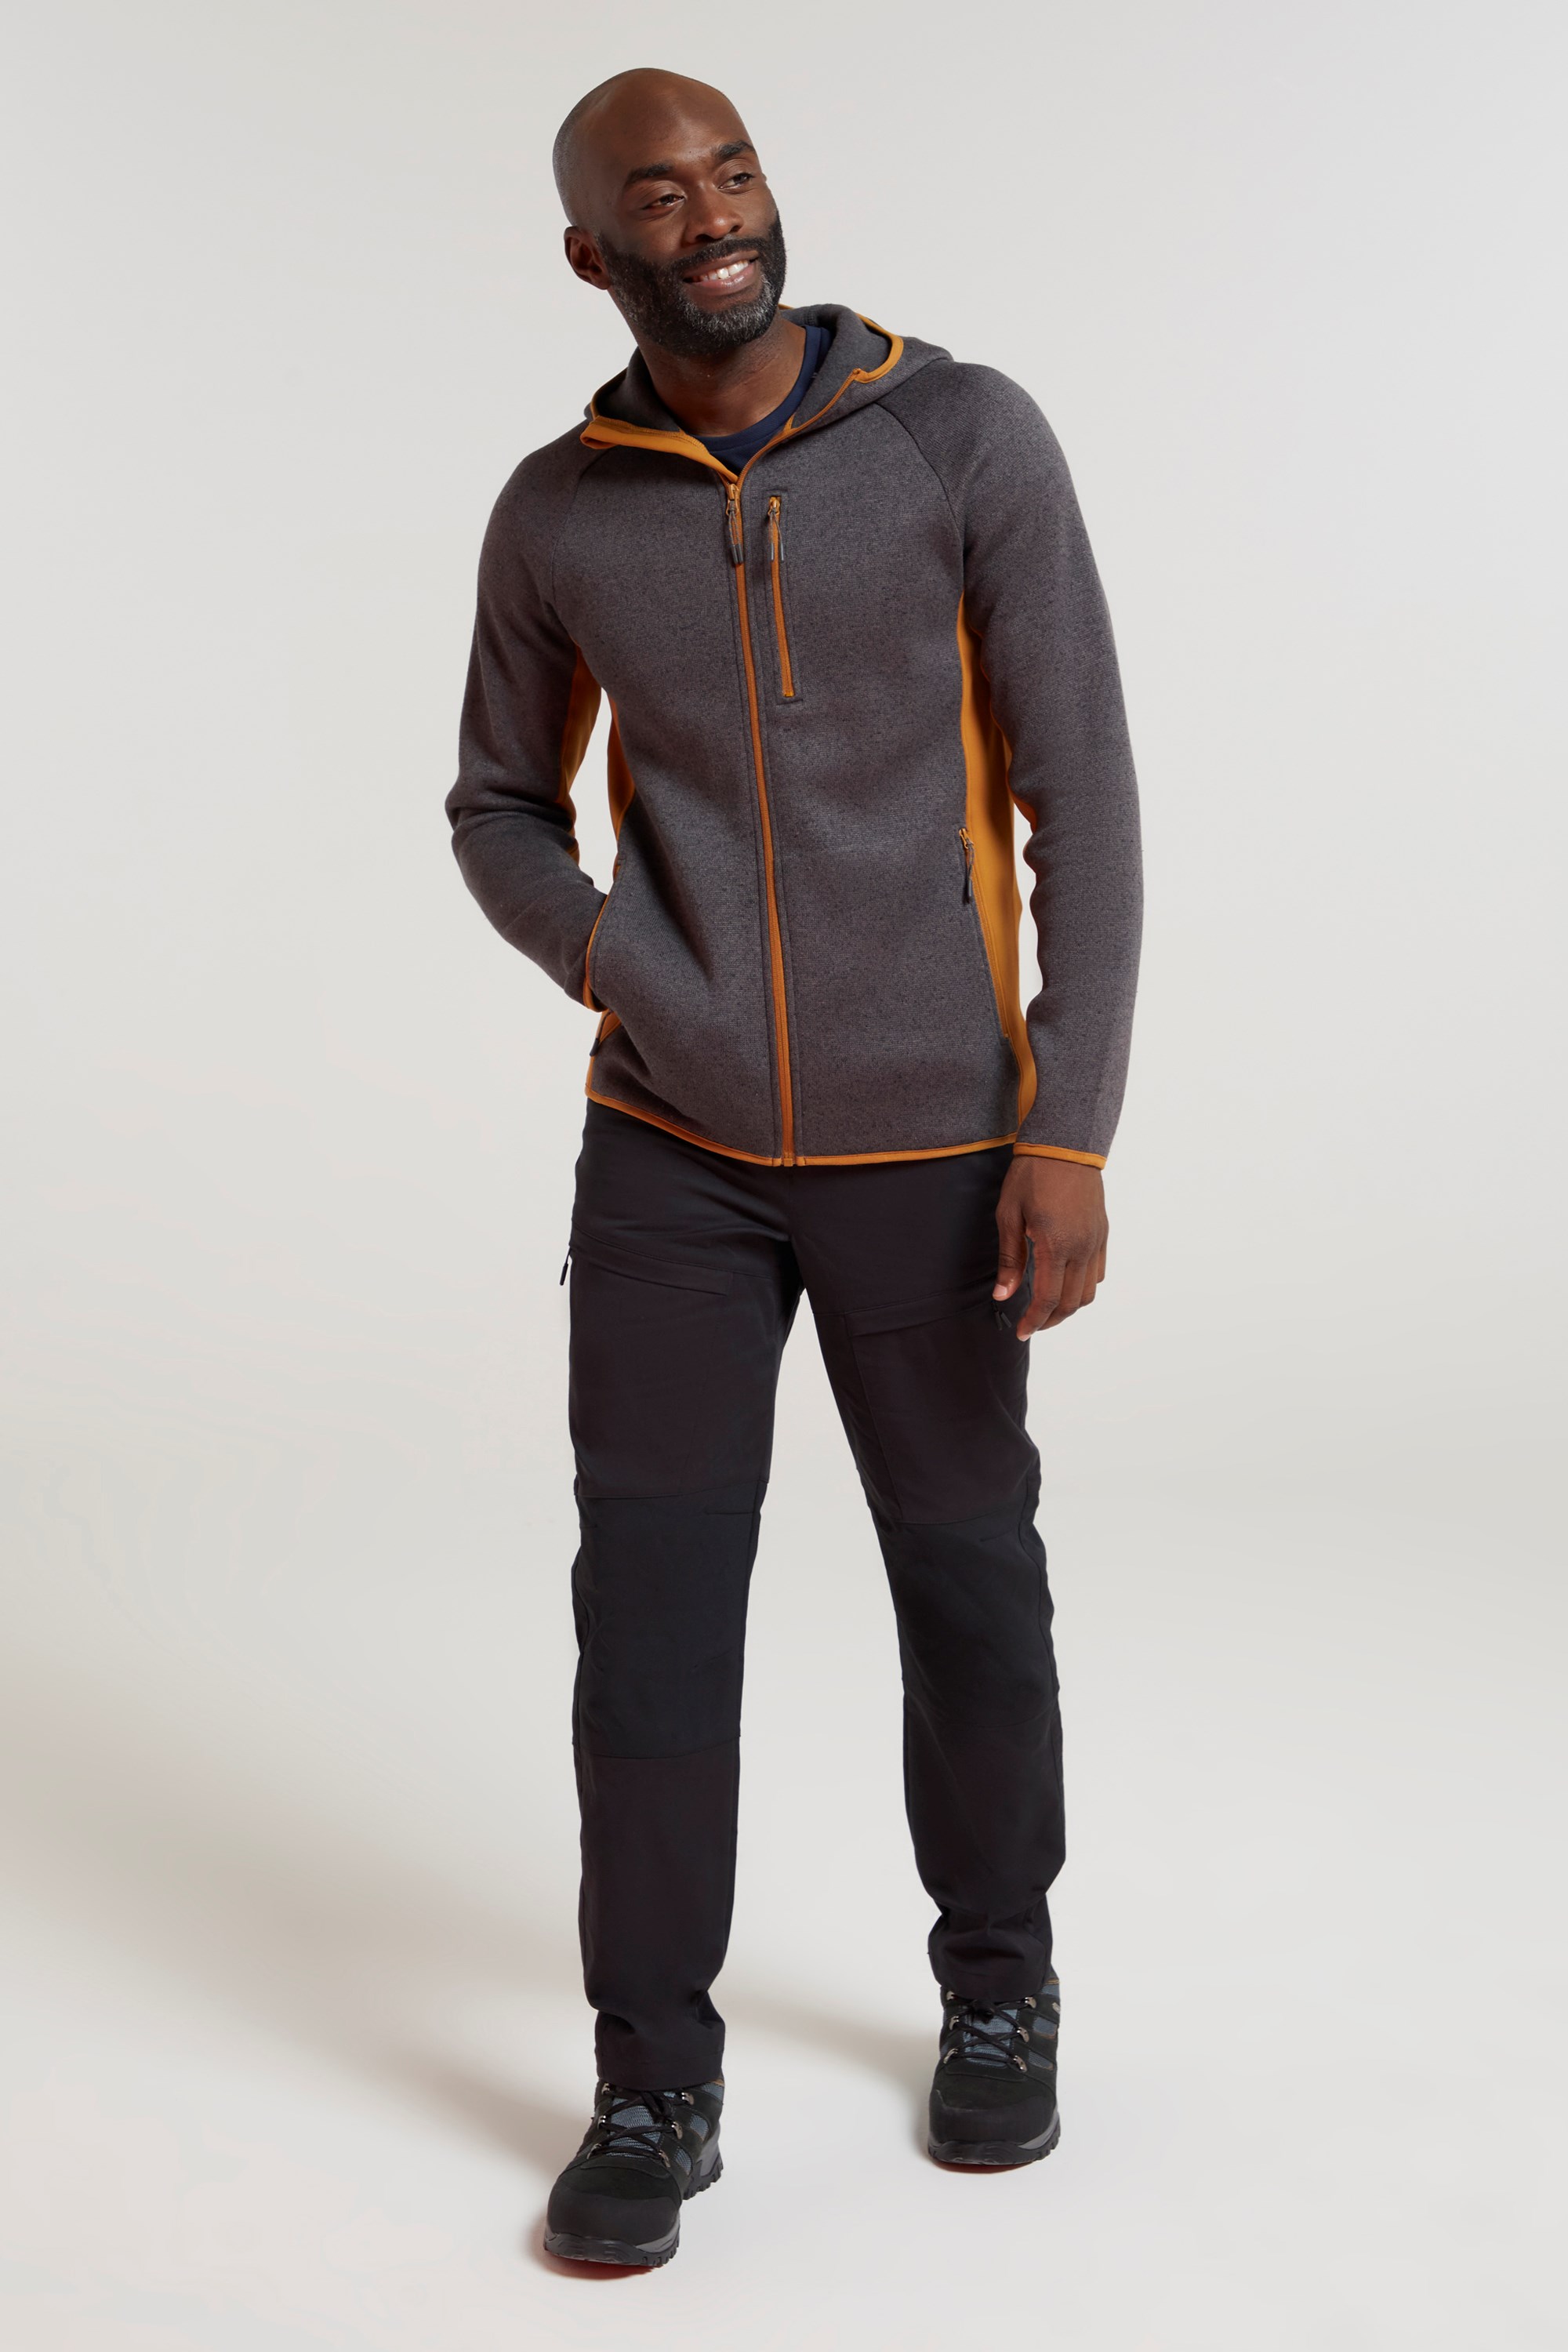 Mountain Warehouse Treston Mens Full-Zip Fleece Jacket - Black | Size 3XL